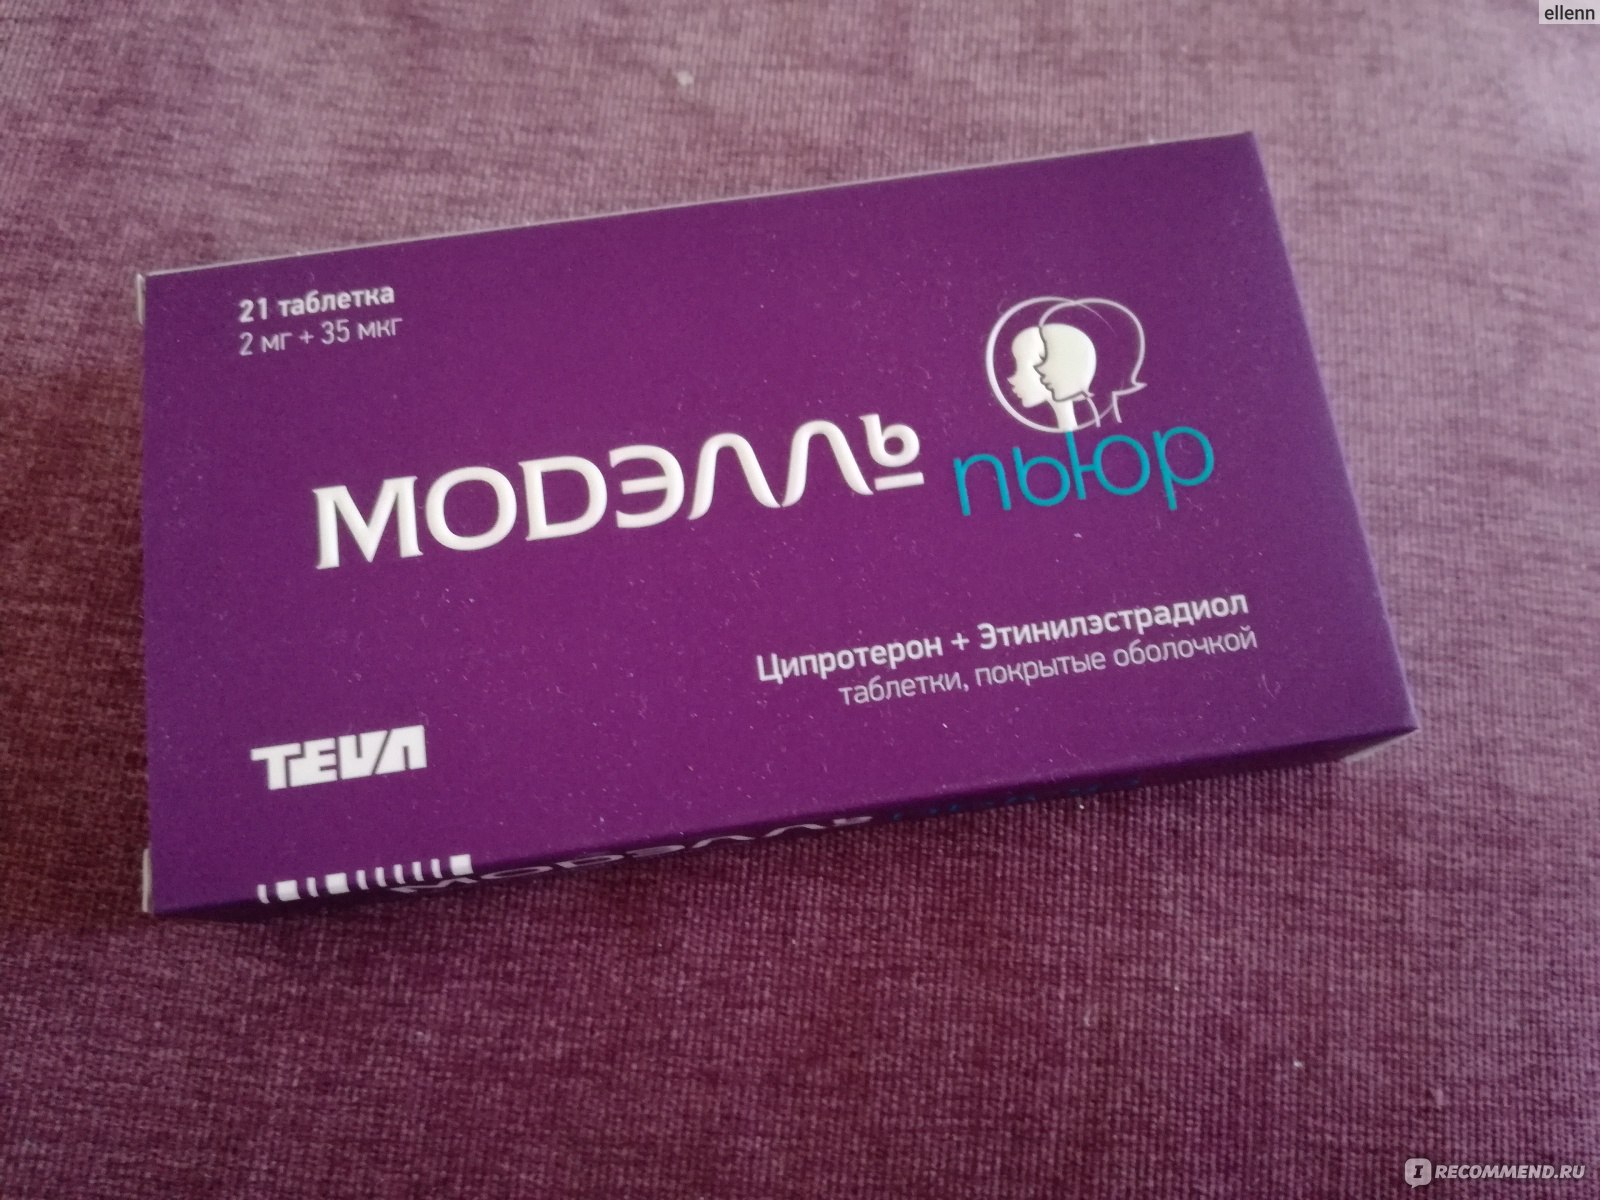 Контрацептивы TeVa Модэлль пьюр - «Модэлль Пьюр помогает для чистой .